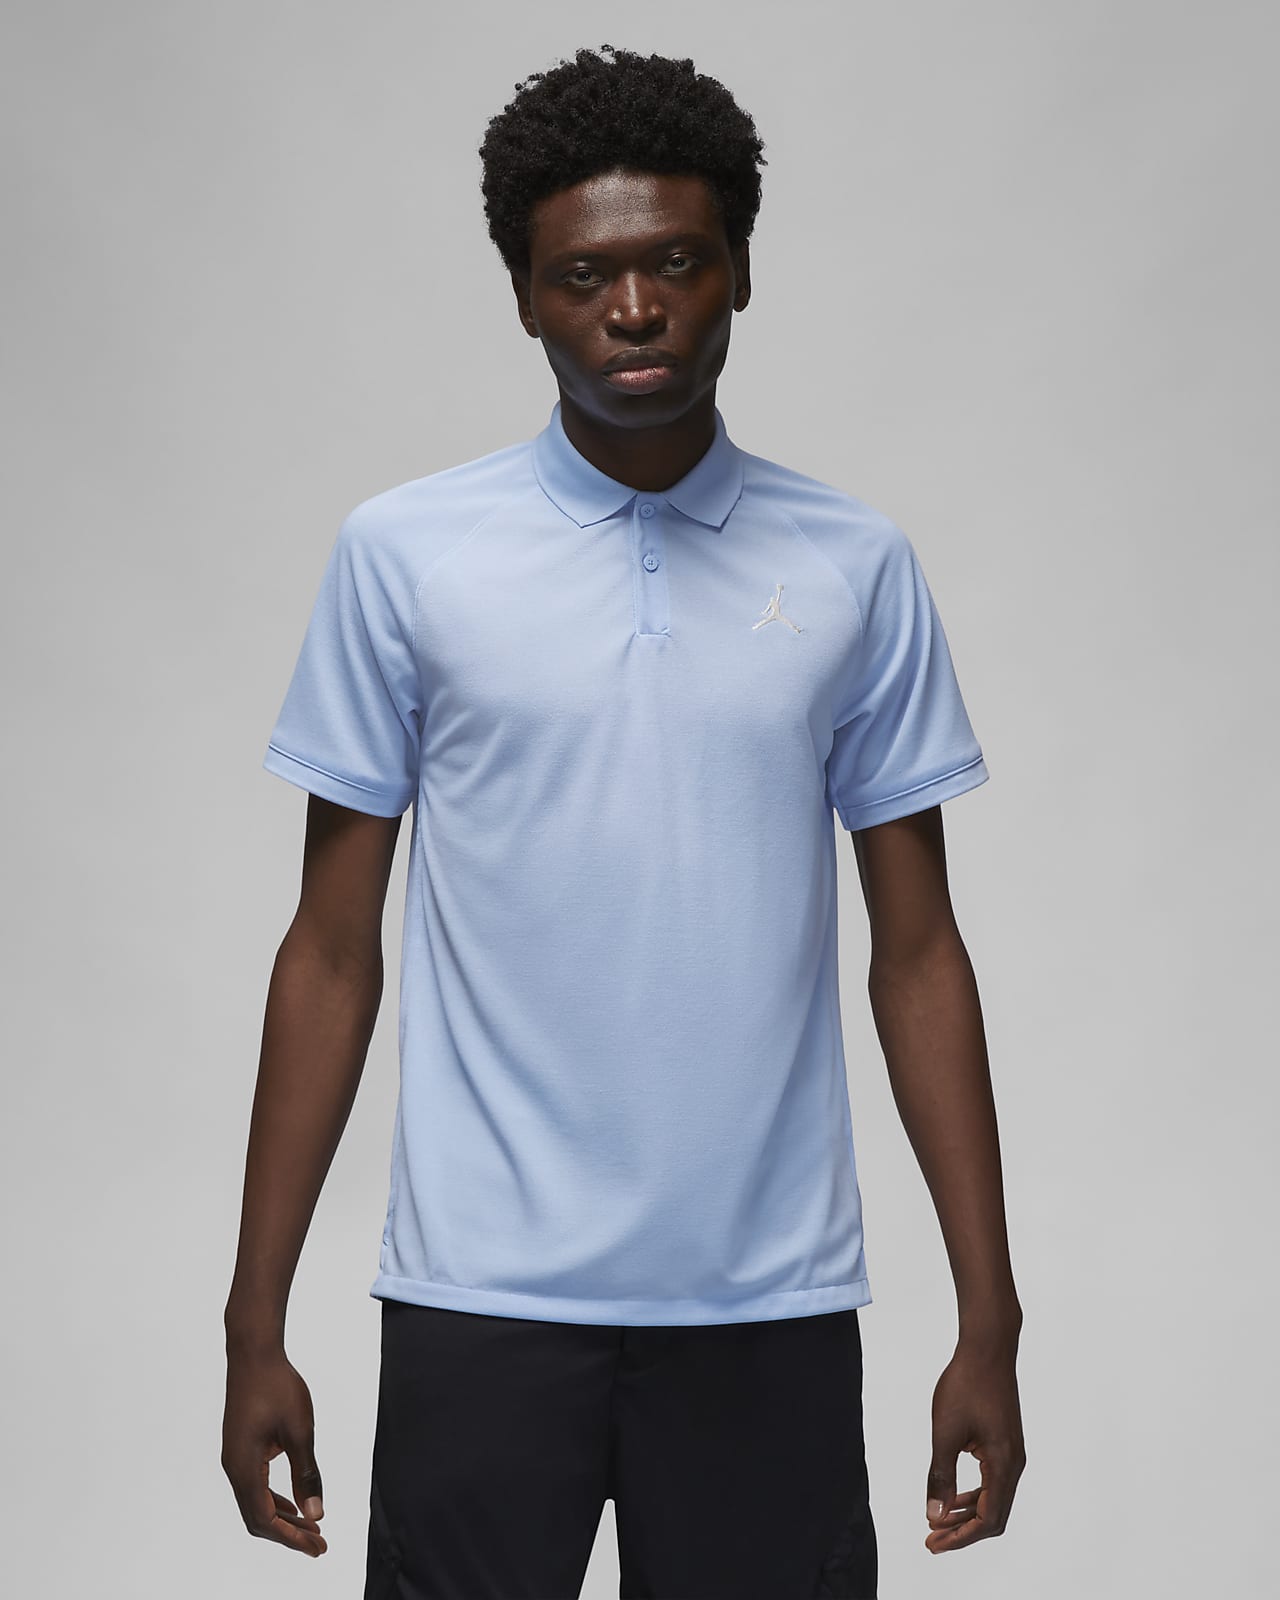 Nike SB Dri-FIT Stripe Polo Shirt in stock at SPoT Skate Shop